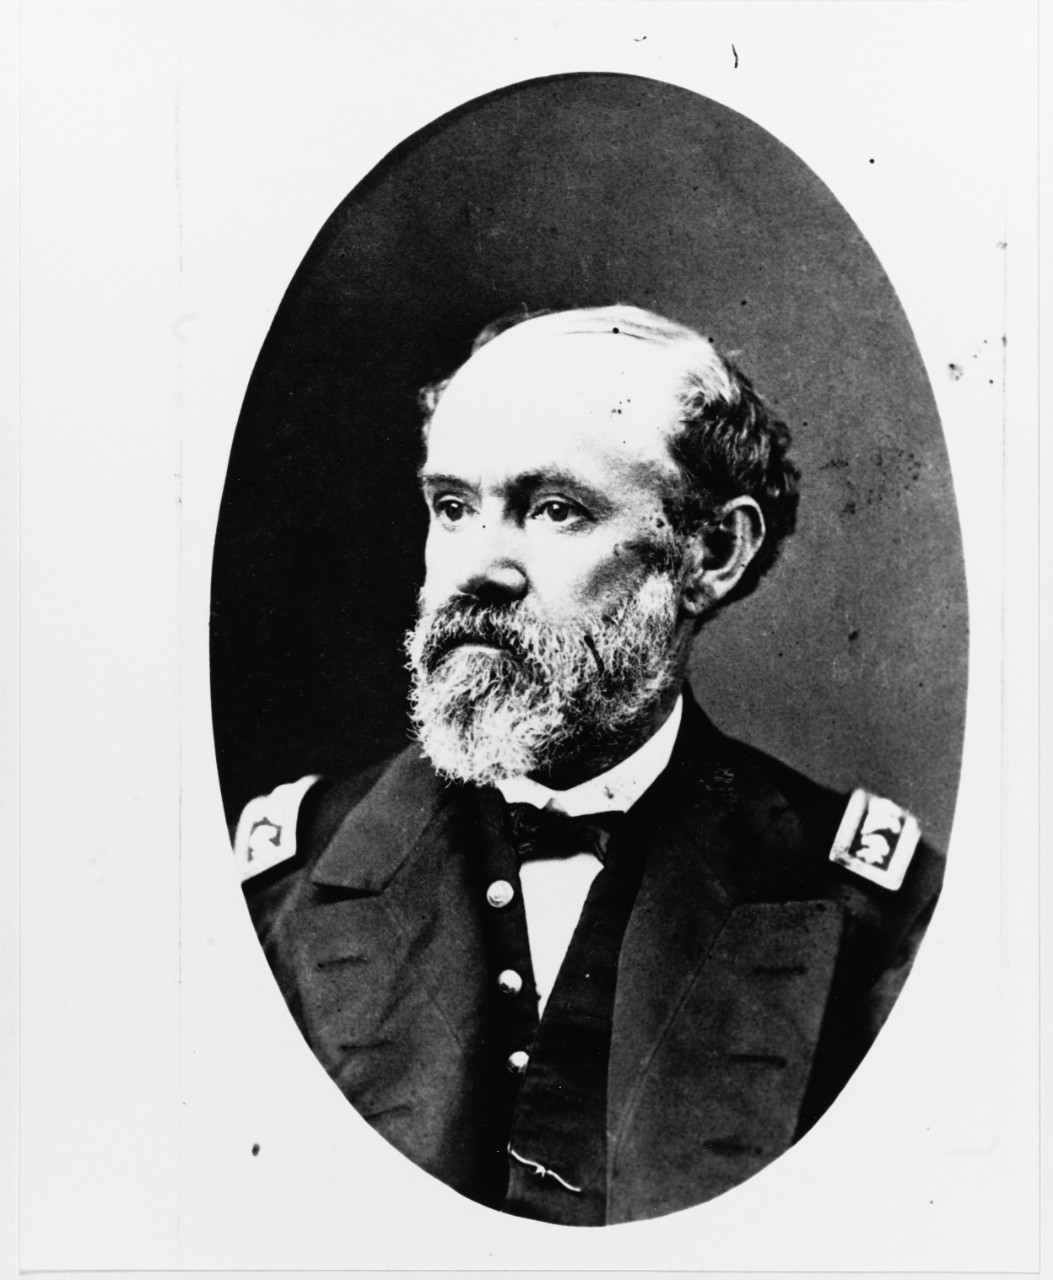 Captain Paul Sherley, USN